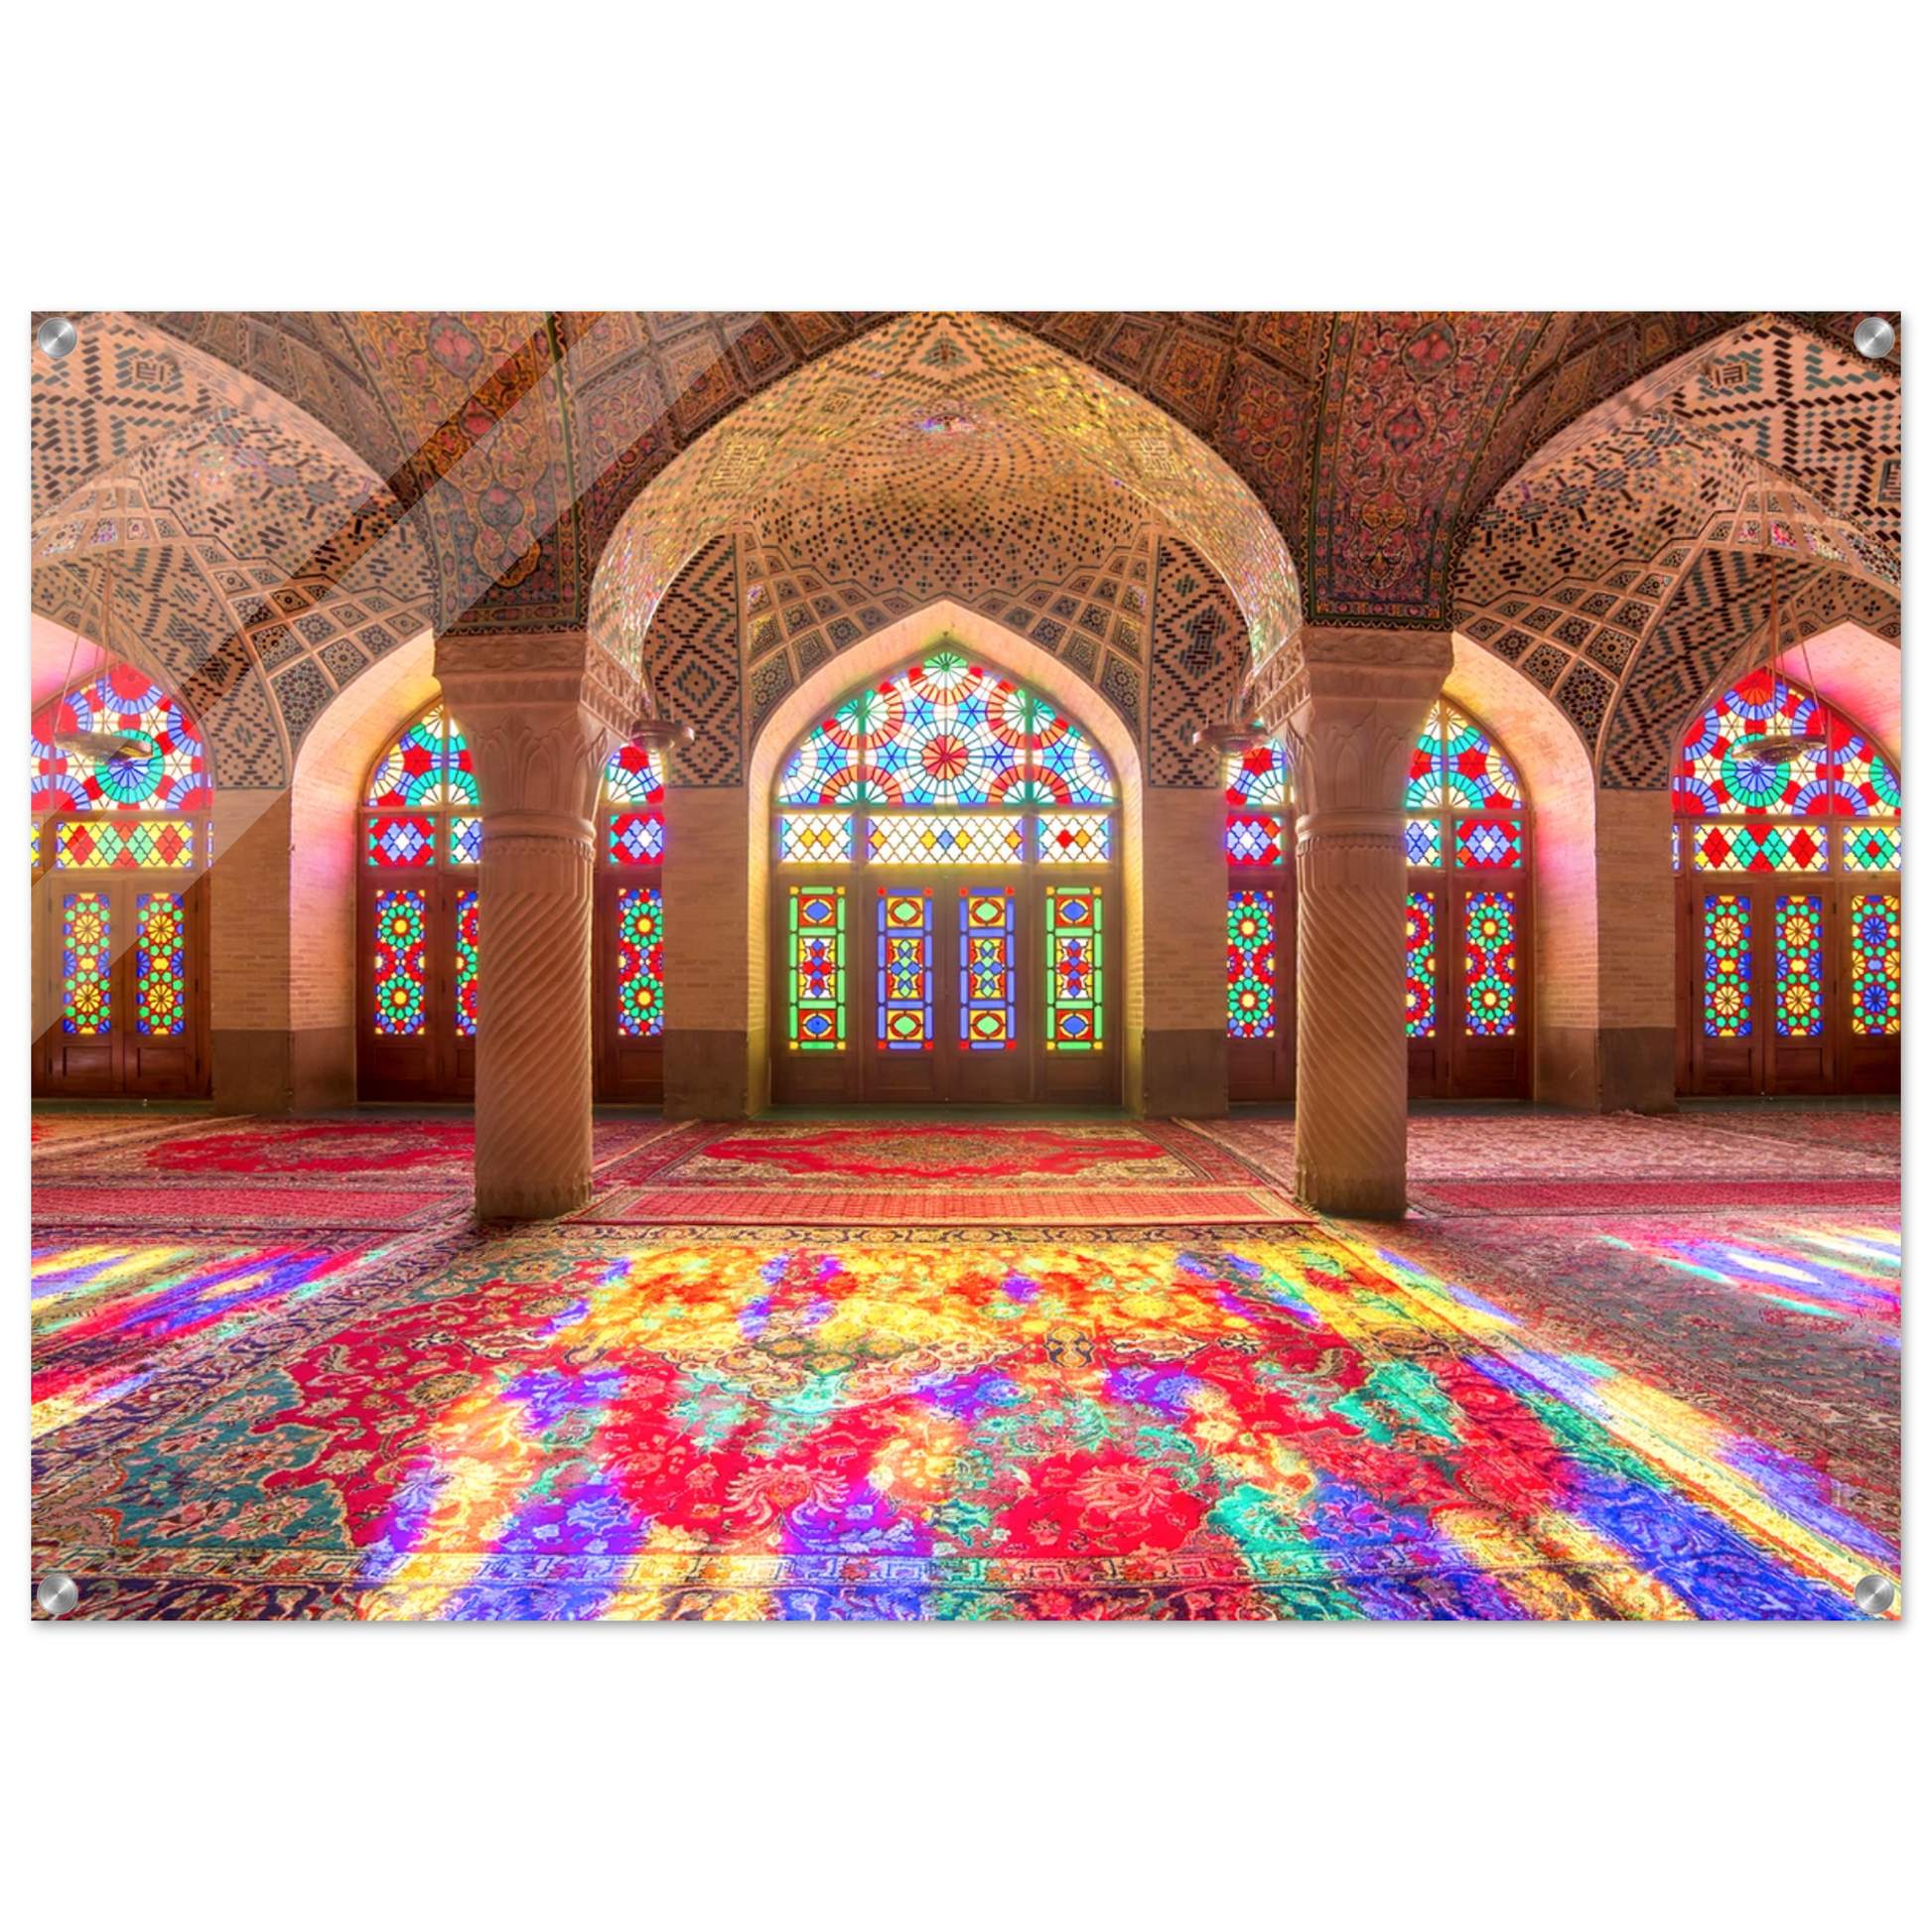 Acrylic HQ Photo Print of Shah Cheragh #2, Shiraz Mosque in Iran - Posterify